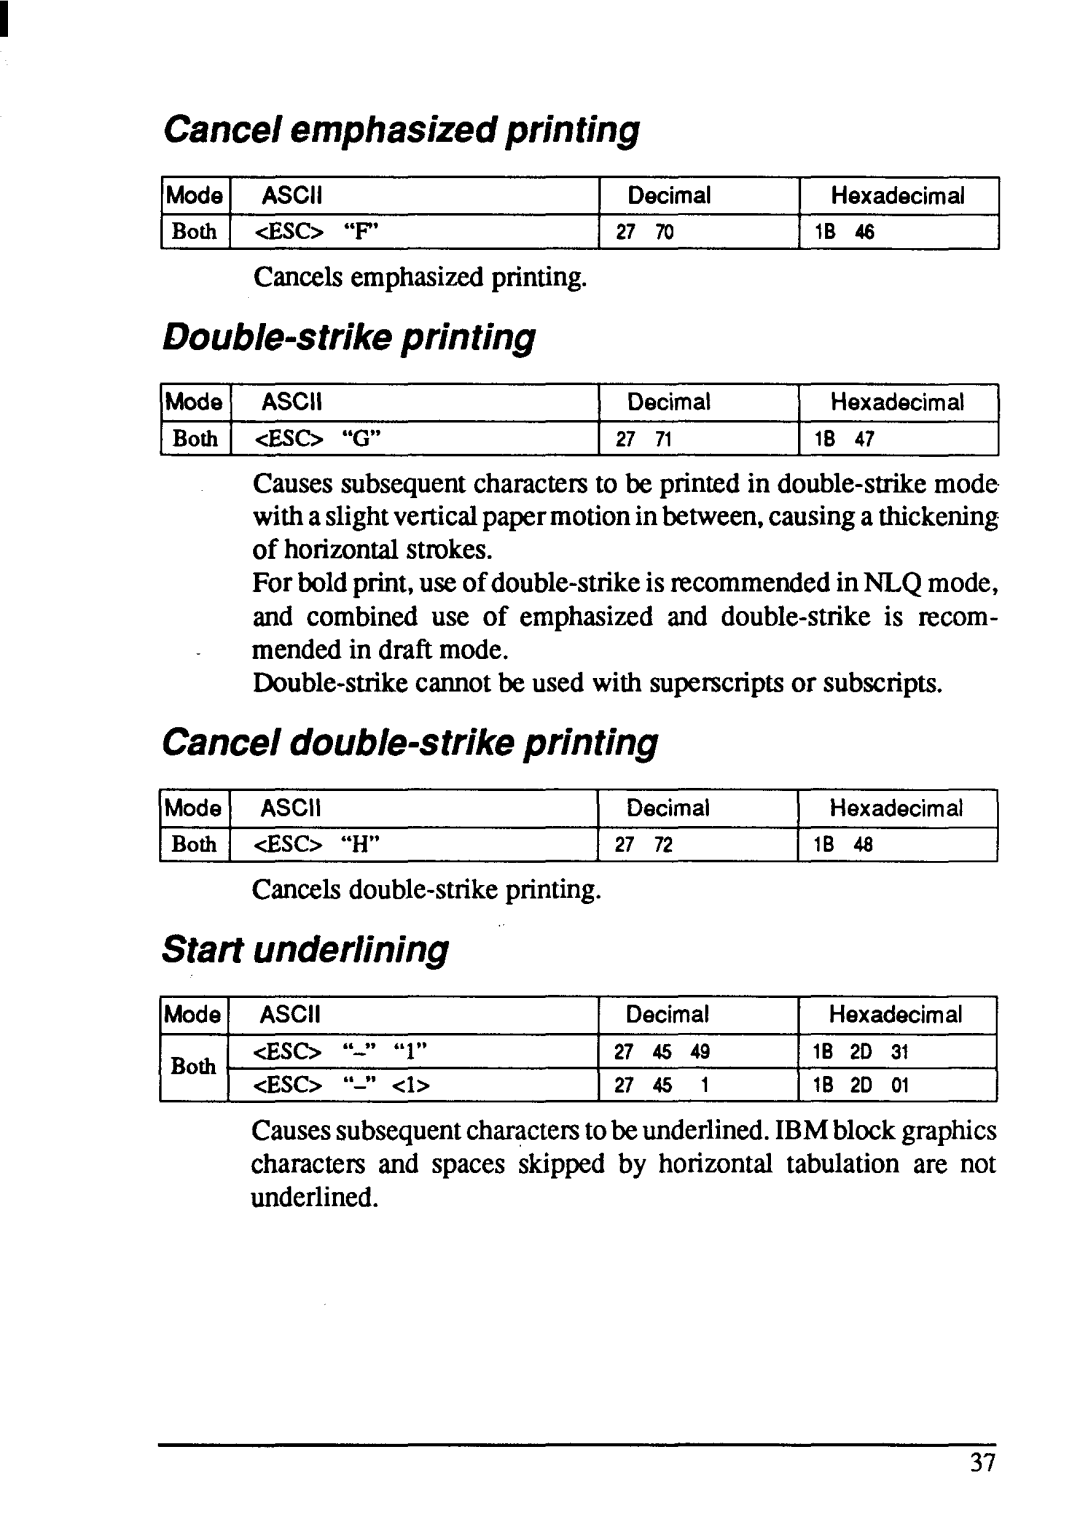 Star Micronics NX-1001 Cancelemphasizedprinting, Double-strikeprinting, Canceldouble-strikeprinting, Start underlining 